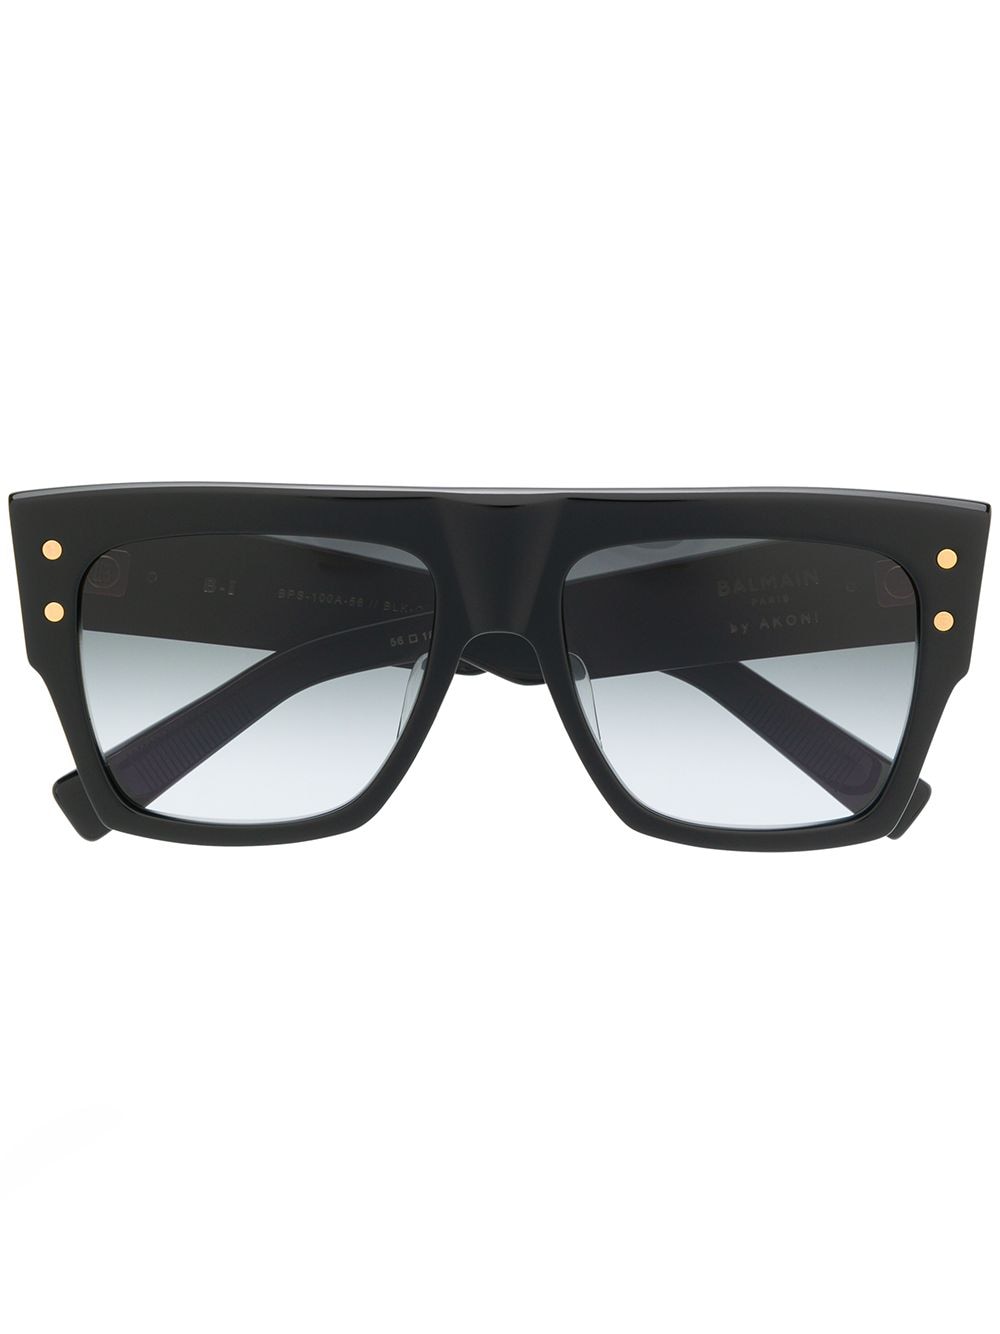 Balmain Eyewear x Akoni gradient tinted sunglasses